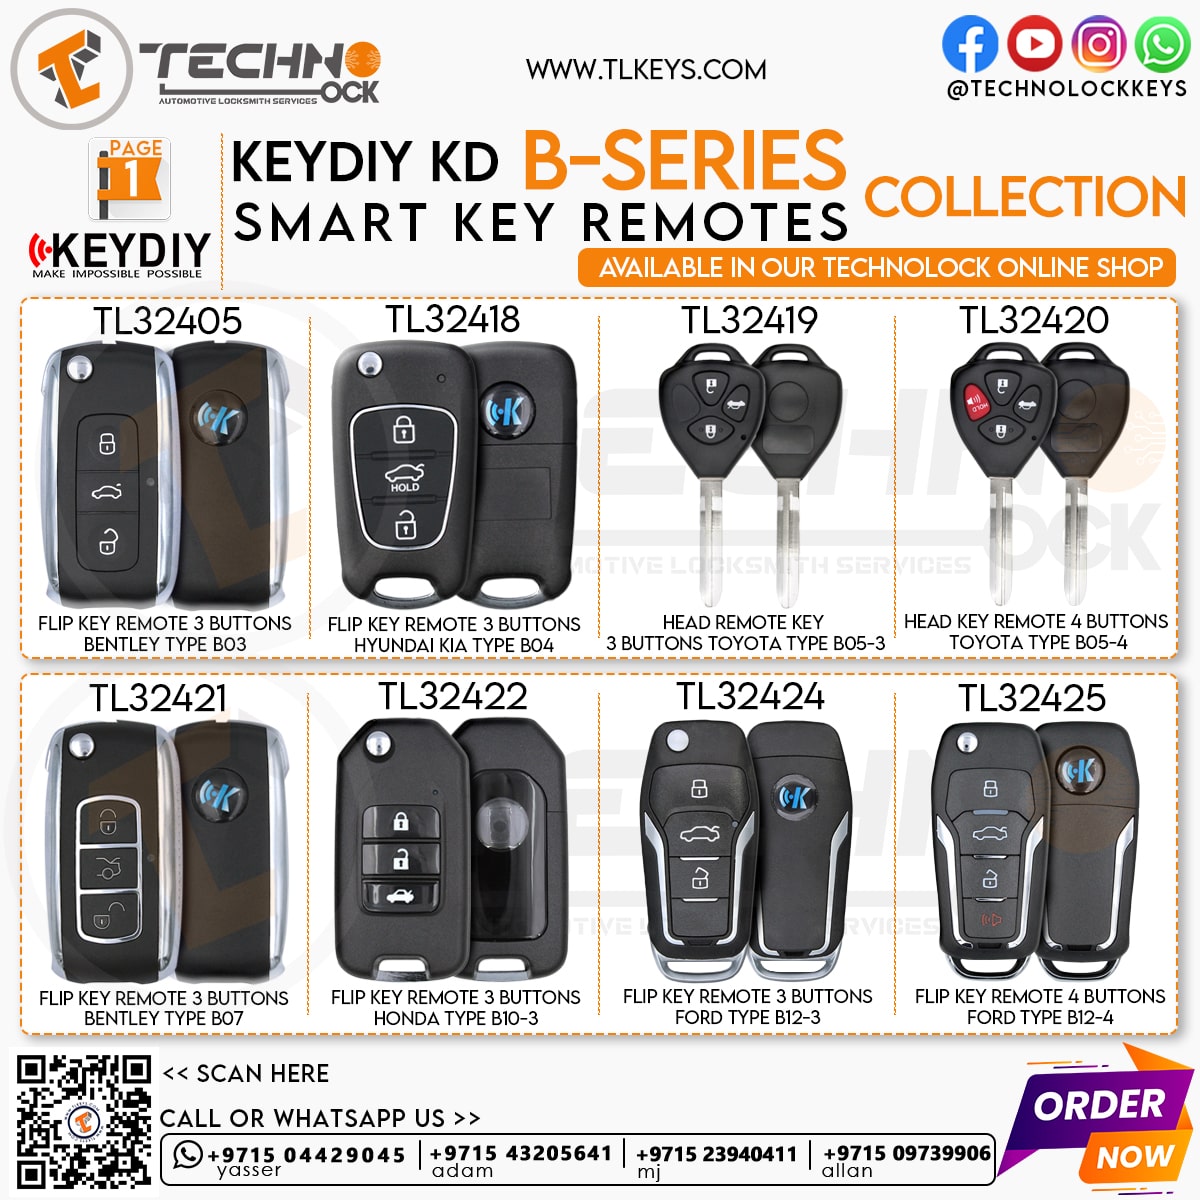  Universal Remote Keydiy B Series Button Key for Kd900 Kd900+ Urg200 Kd-X2 Kd-X2 Key Generator 